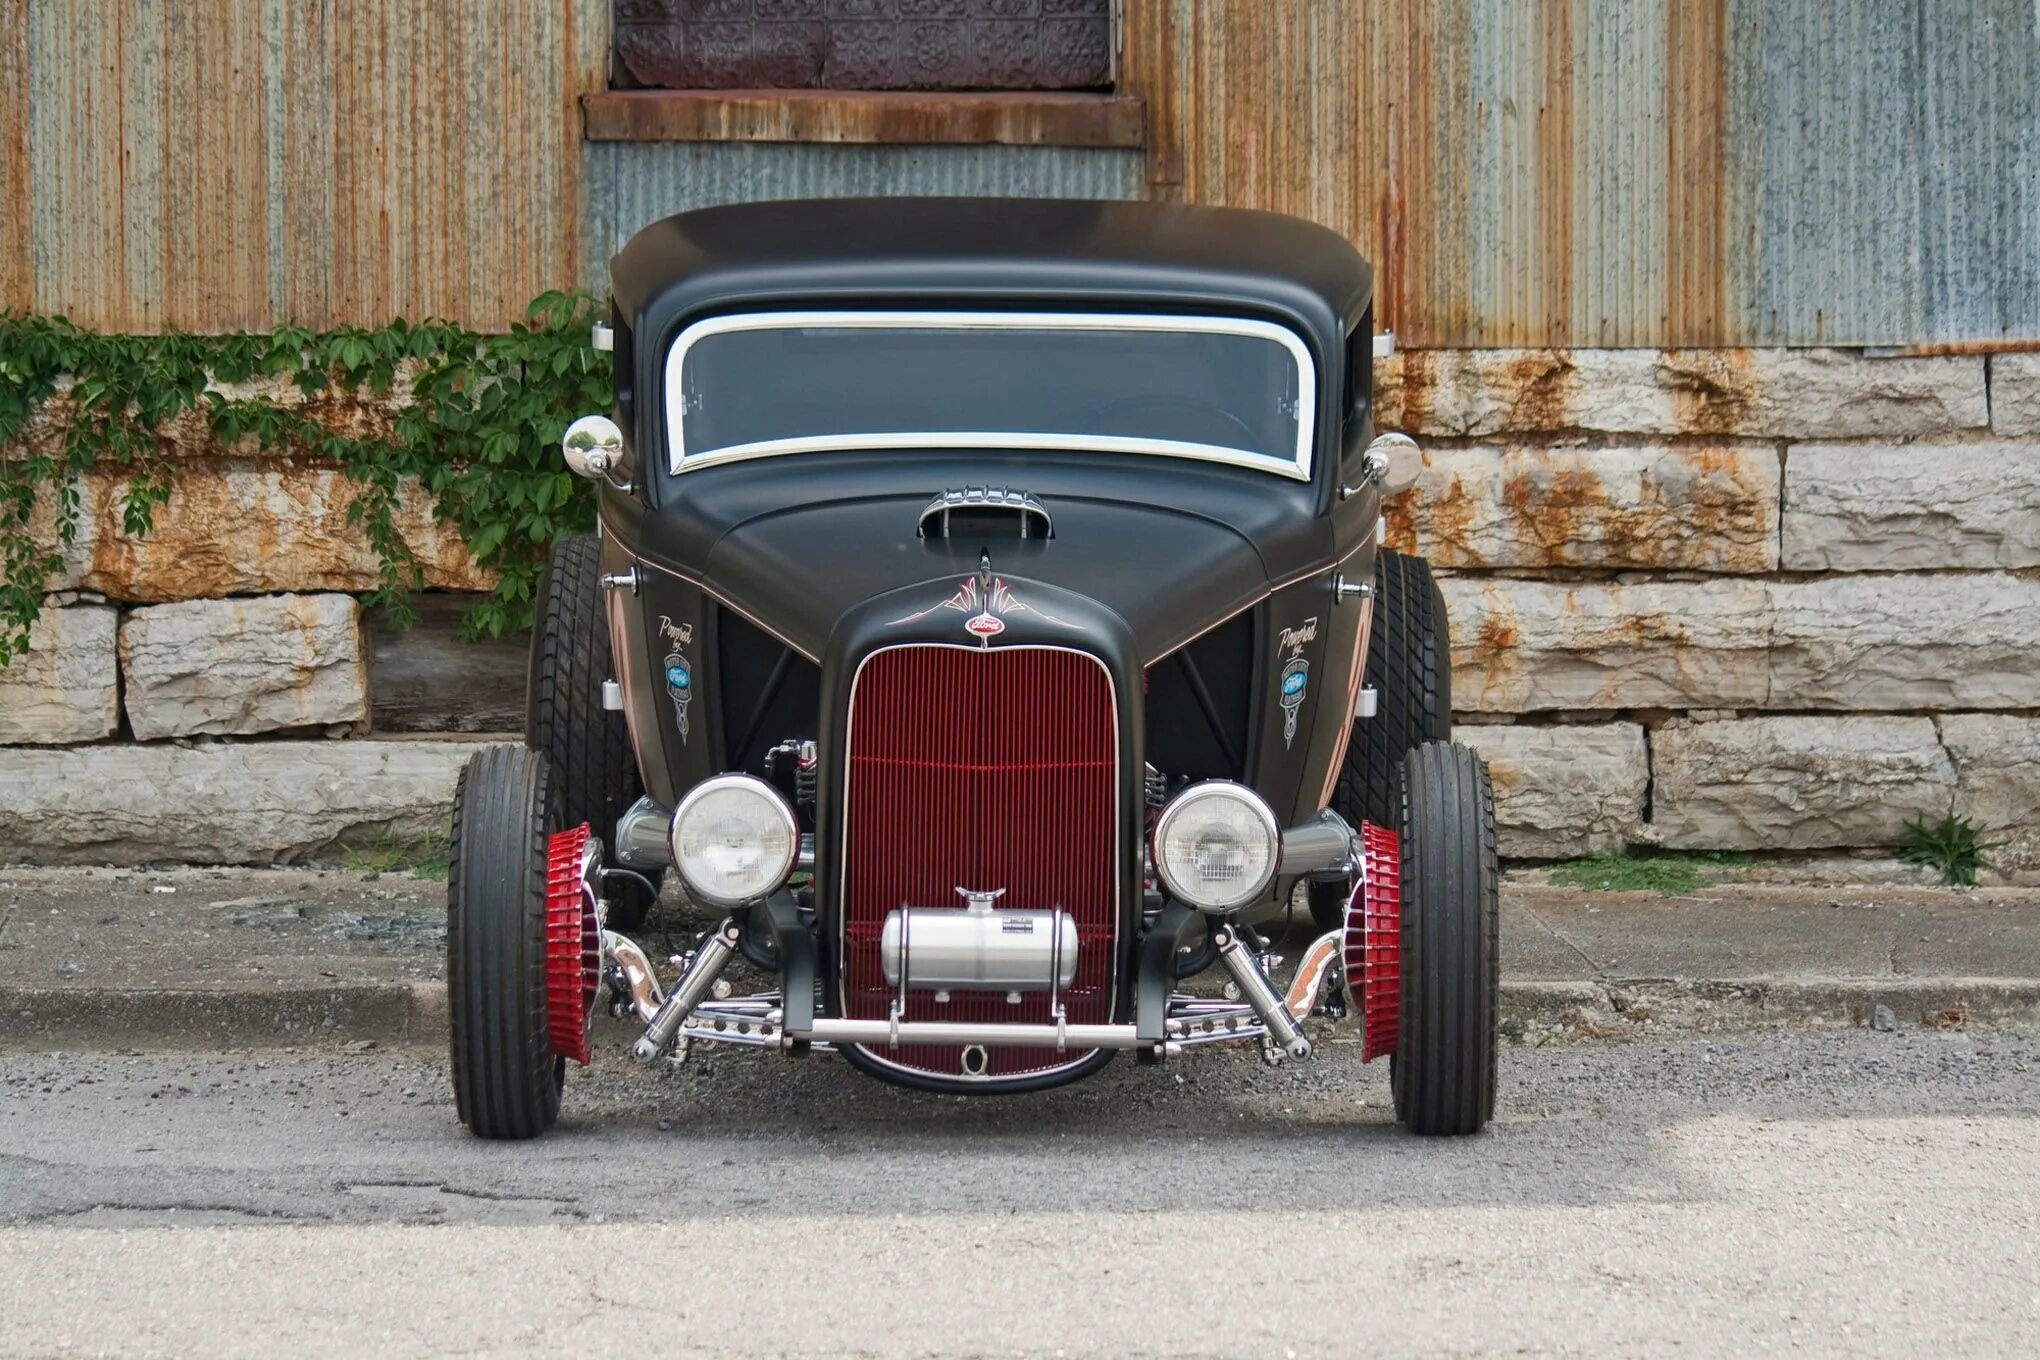 Пятьдесят род. Ford 1932 Coupe hot Rod. Форд 1932 седан хот-род. Хот род 50х. Хот род 1950г.